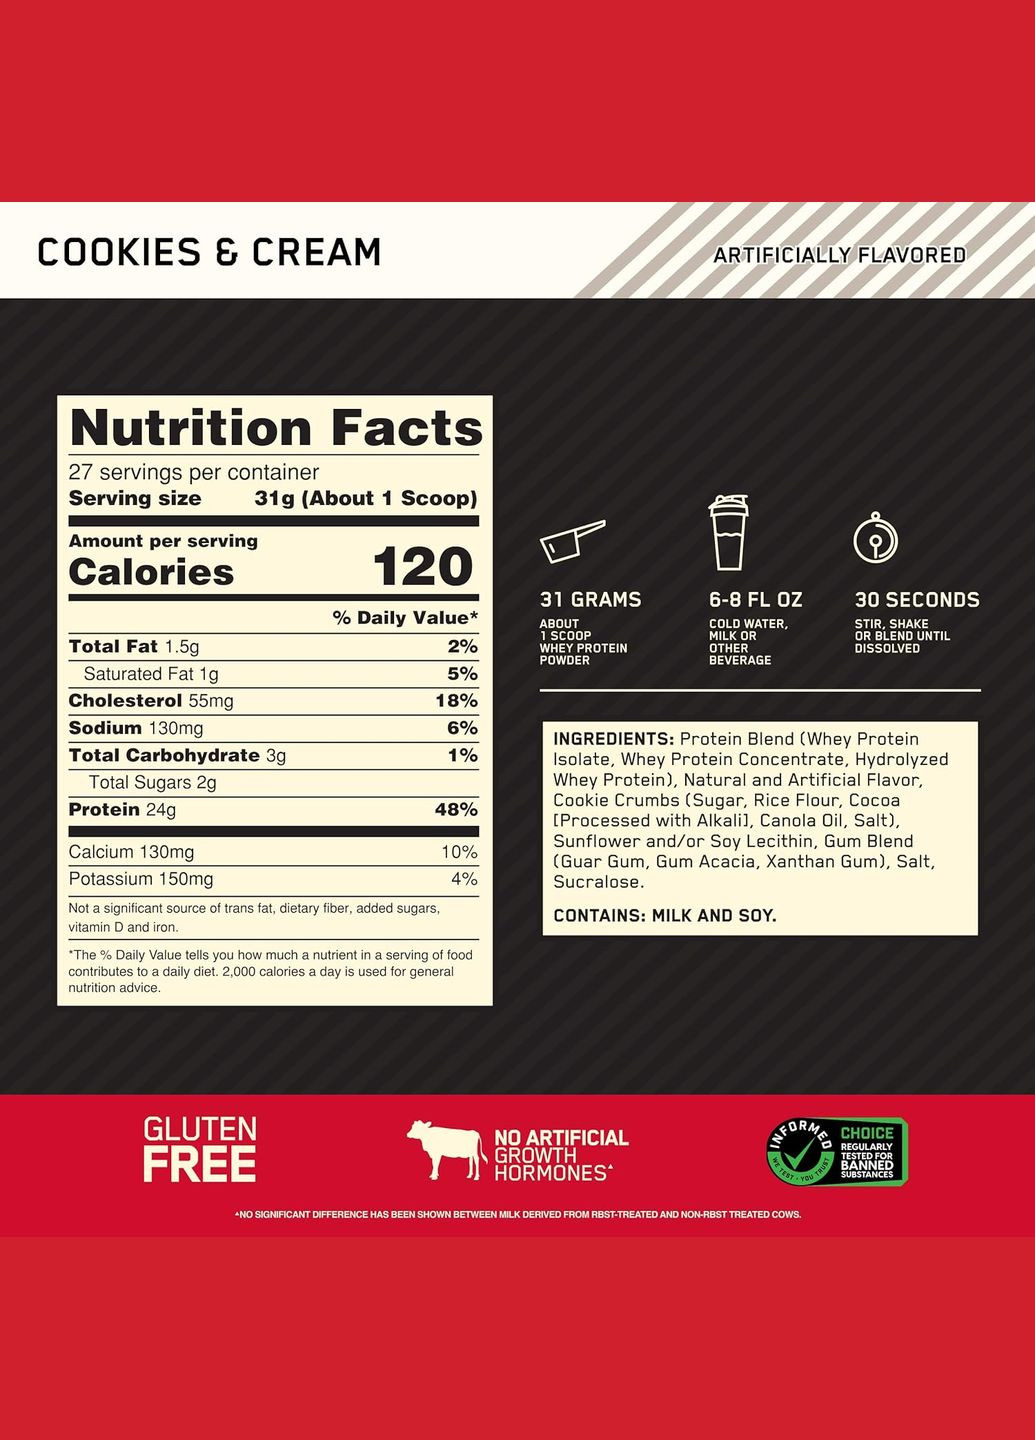 Протеин Optimum Gold Standard 100% Whey 908 g (Cookies cream) Optimum Nutrition (284120241)